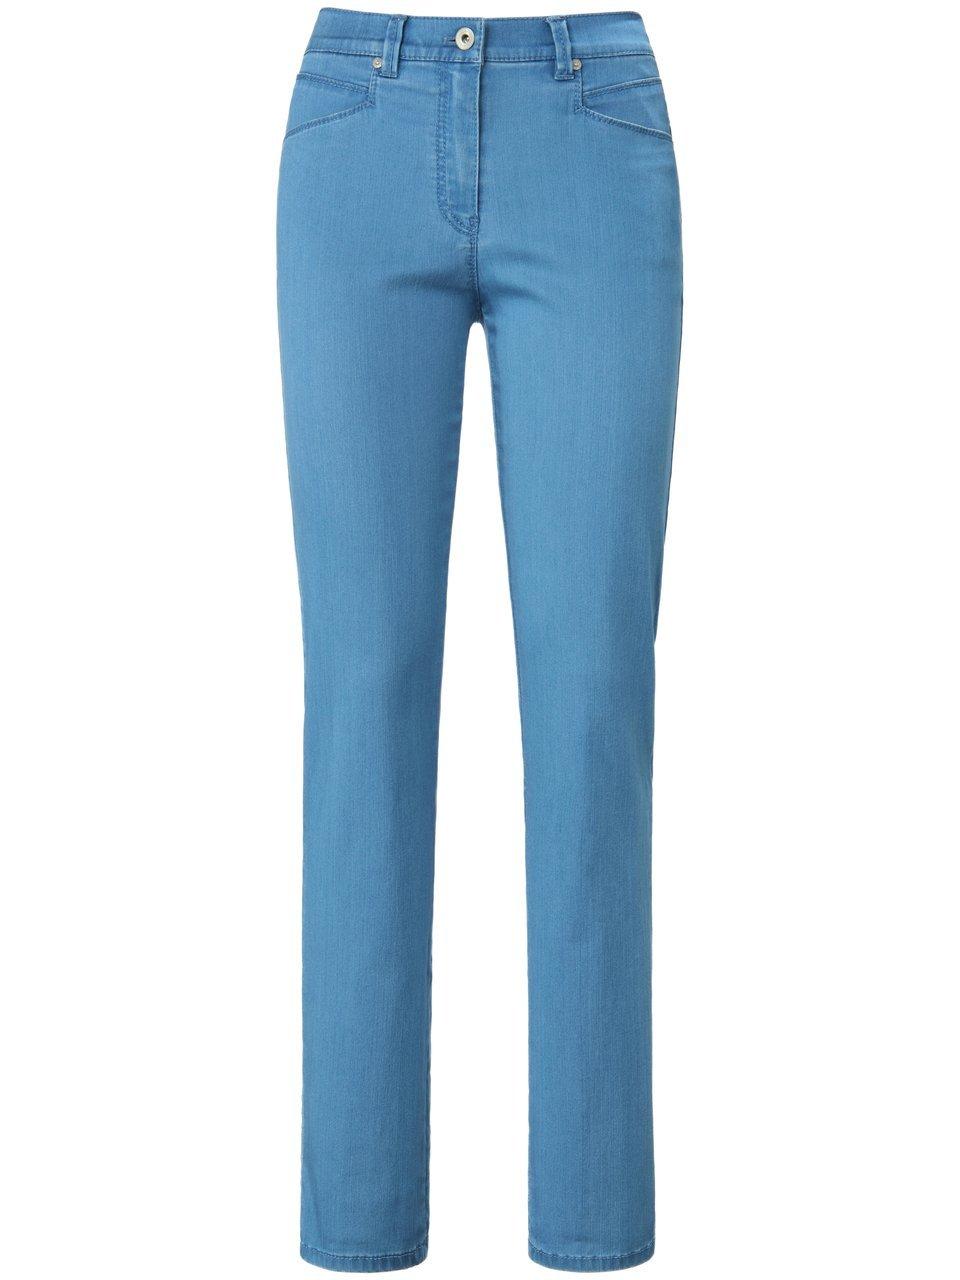 ProForm S Super Slim jeans model Lea Van Raphaela by Brax denim